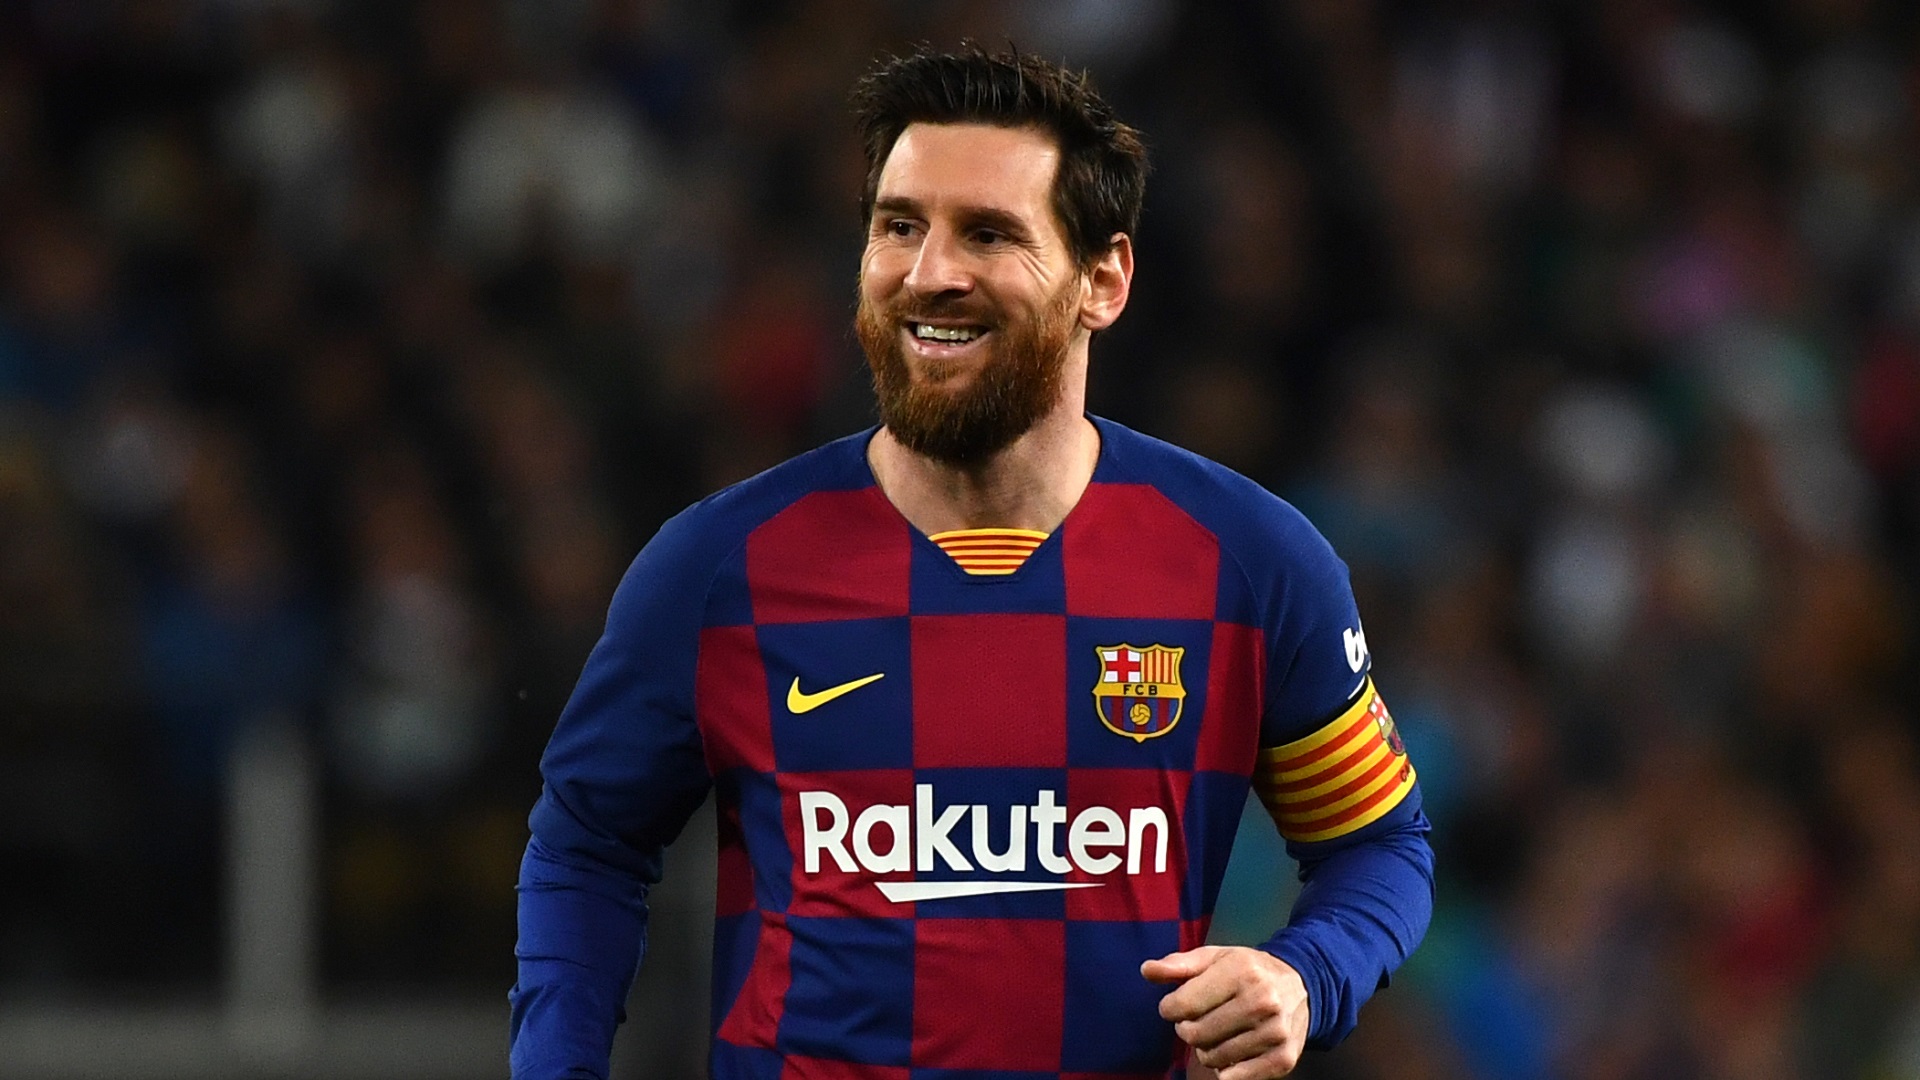 'He has scored goals for 14 years' - Messi's barren spell not troubling Setien despite Barca downturn